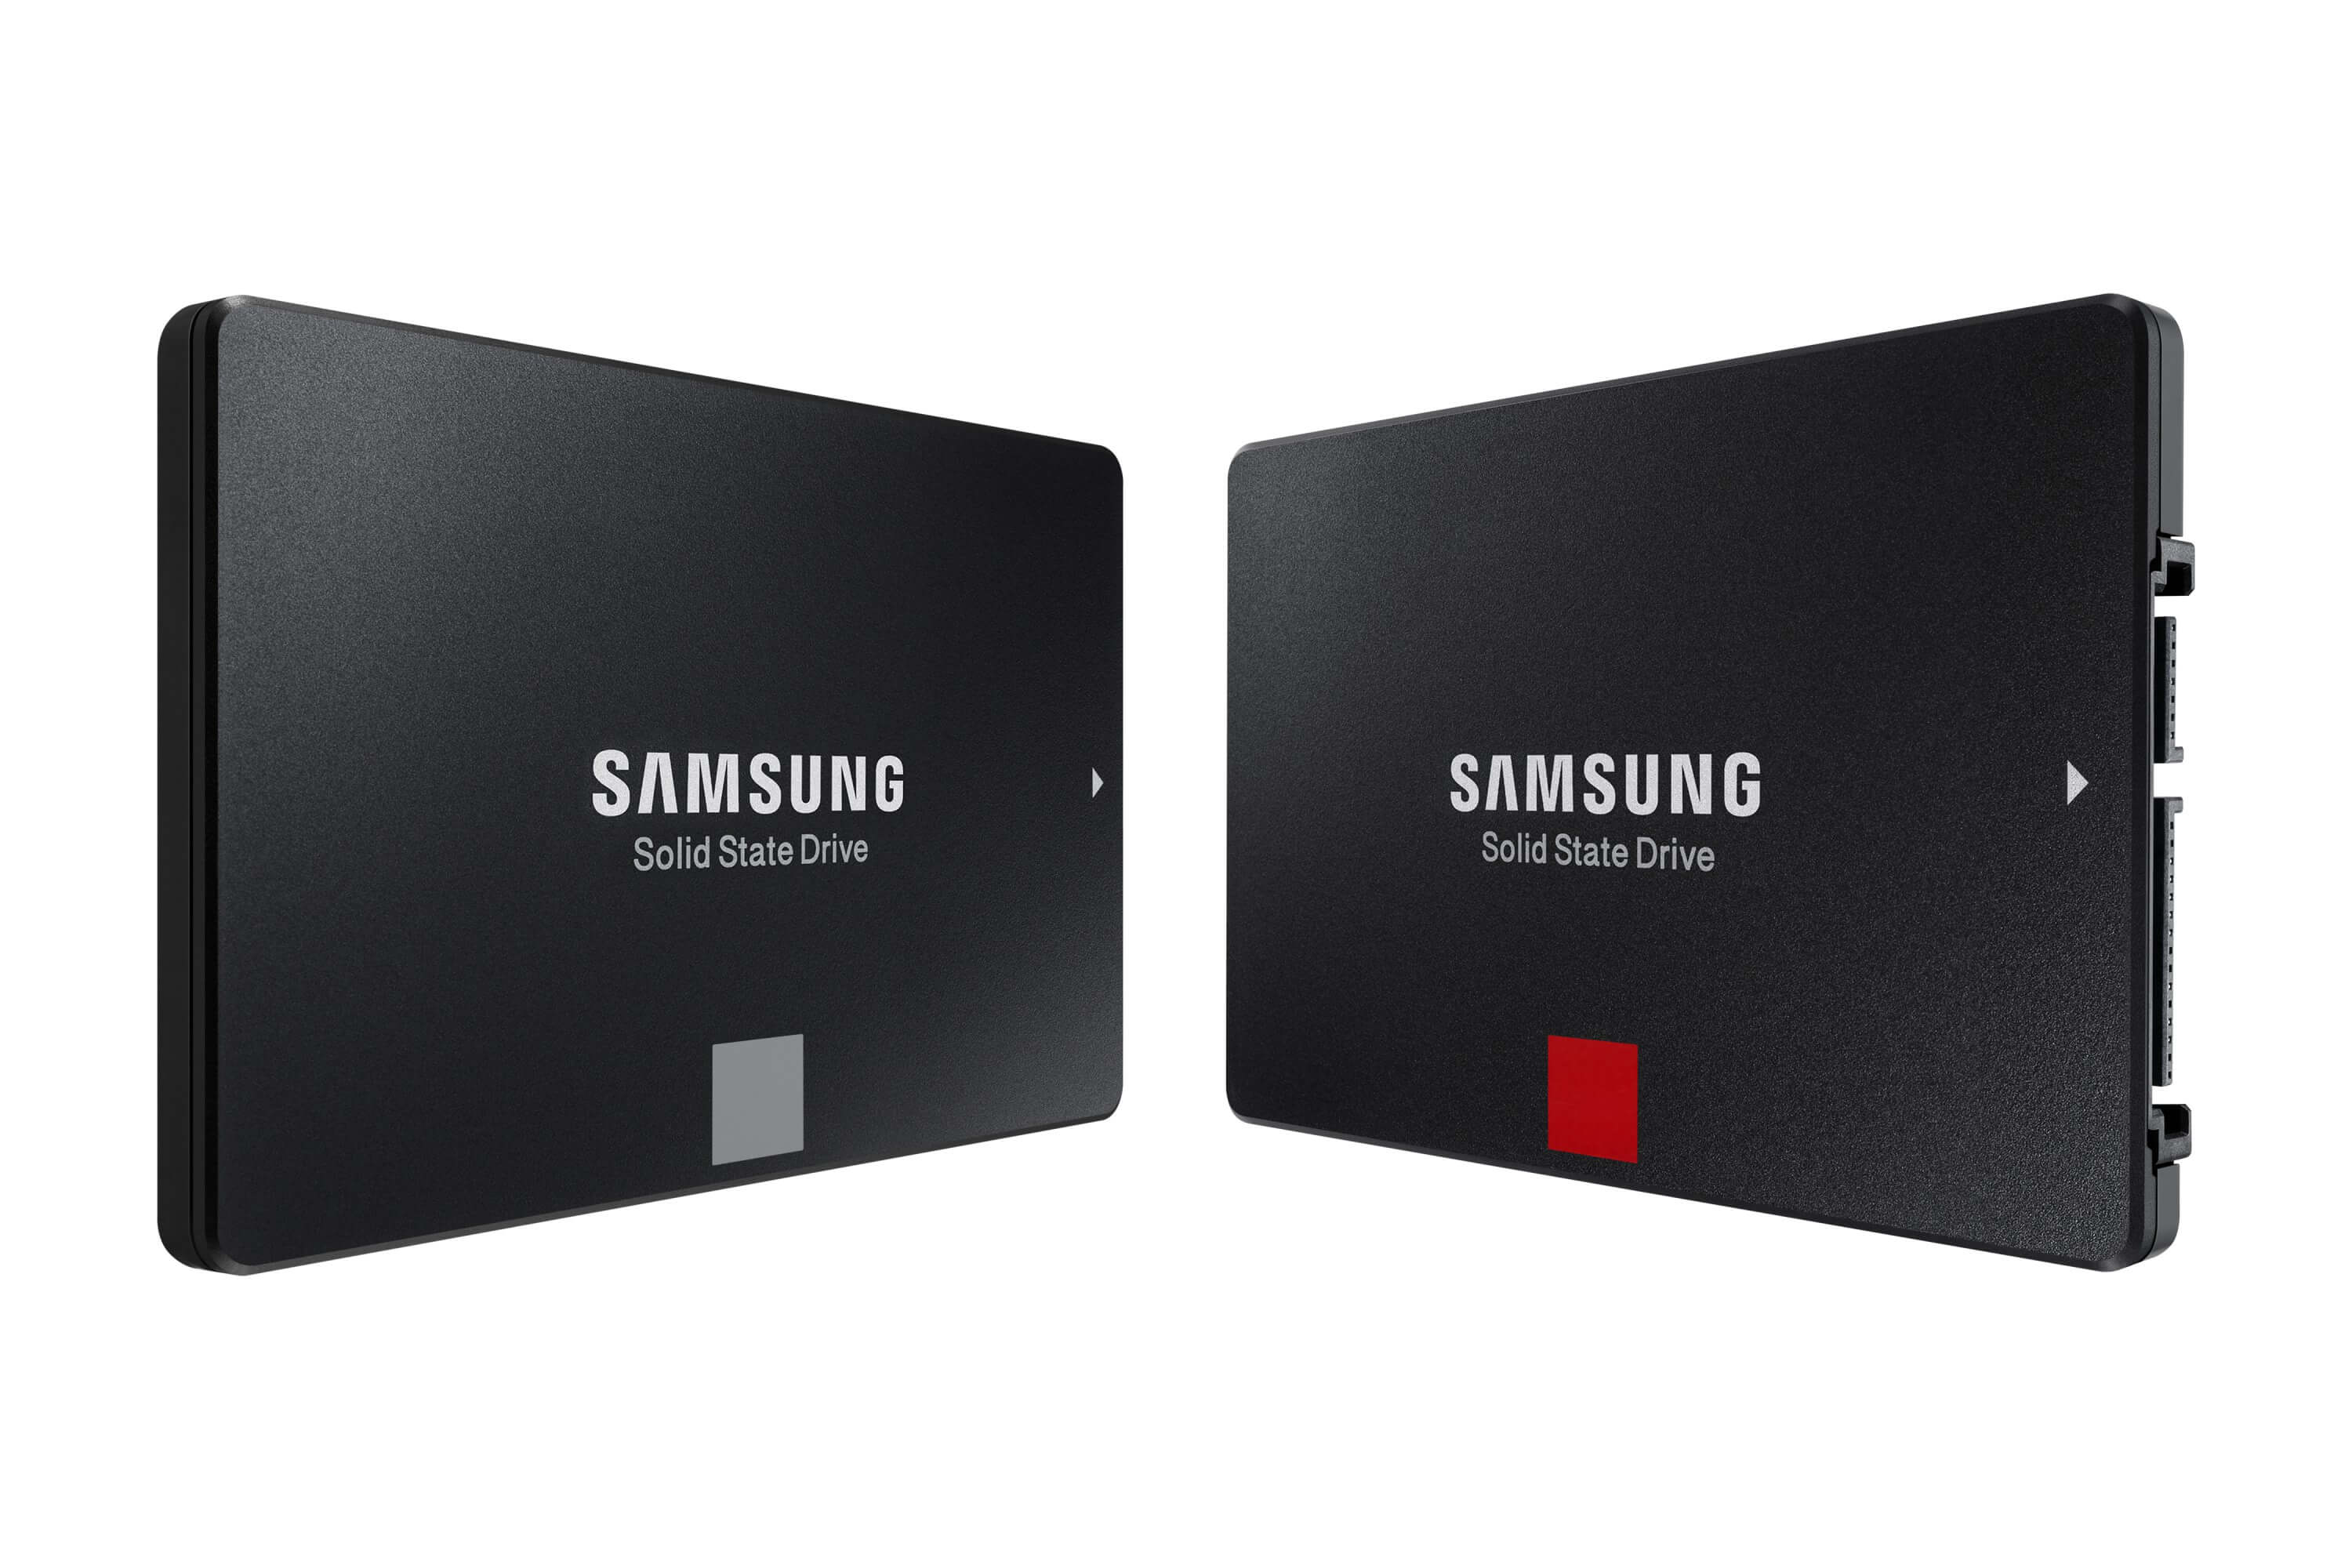 Samsung представила SSD-накопители 860 Pro и 860 Evo